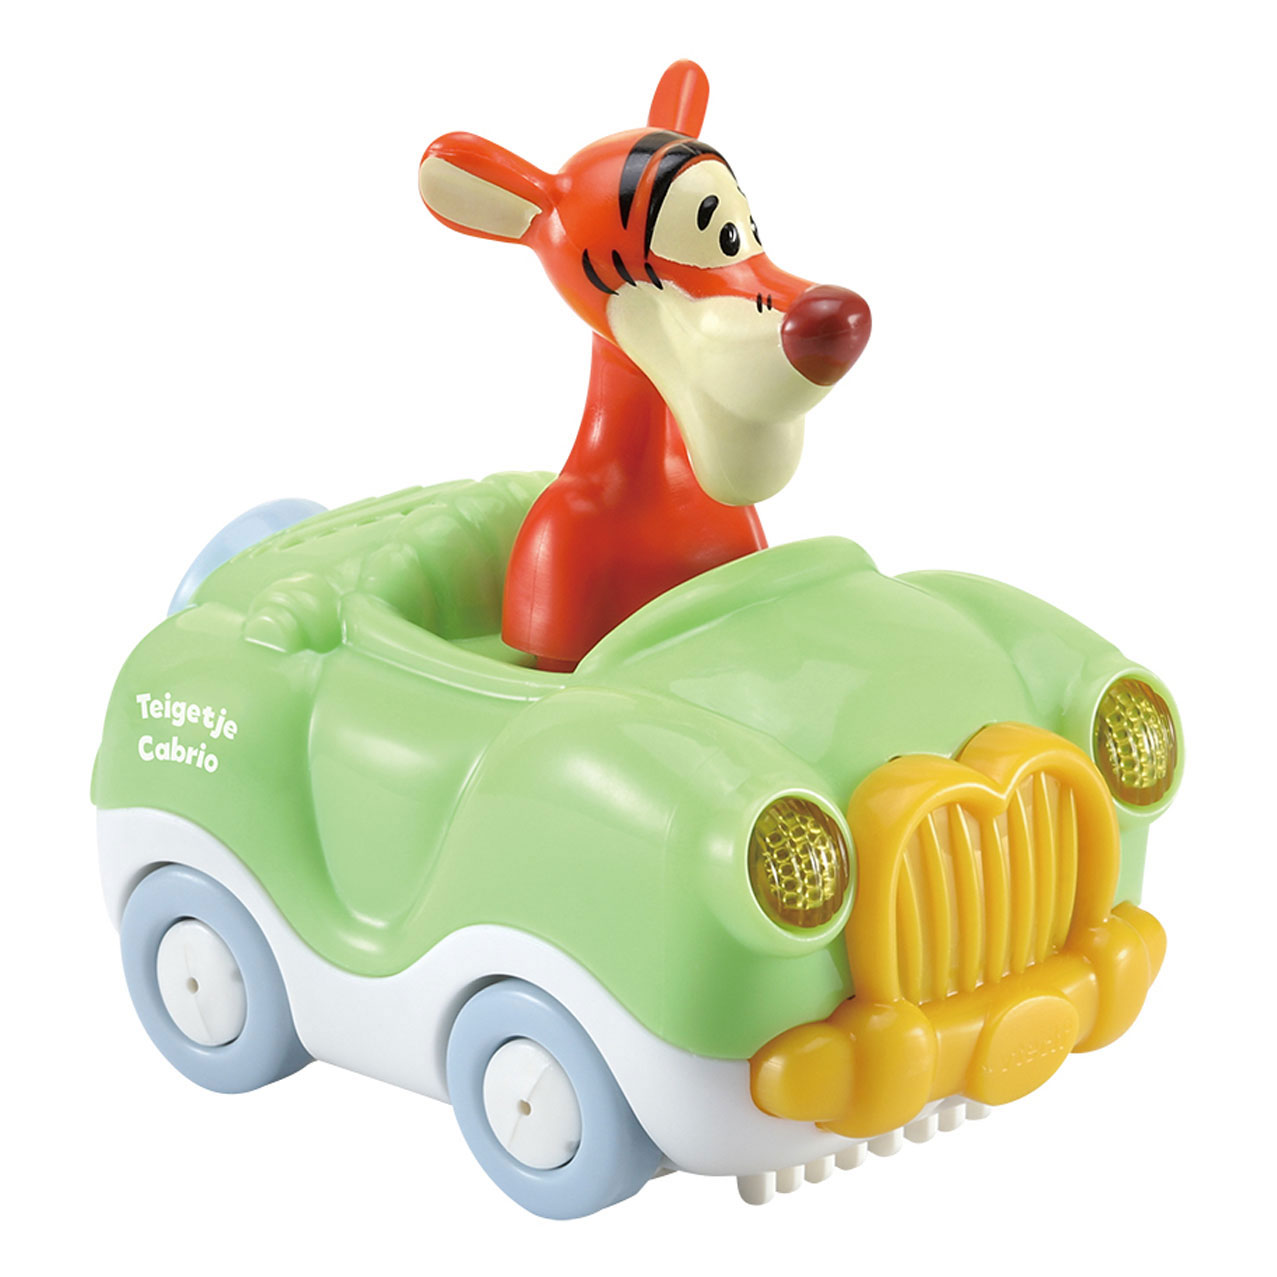 Rechthoek Onzin in verlegenheid gebracht VTech Toet Toet Cars - Disney Tiger | Thimble Toys